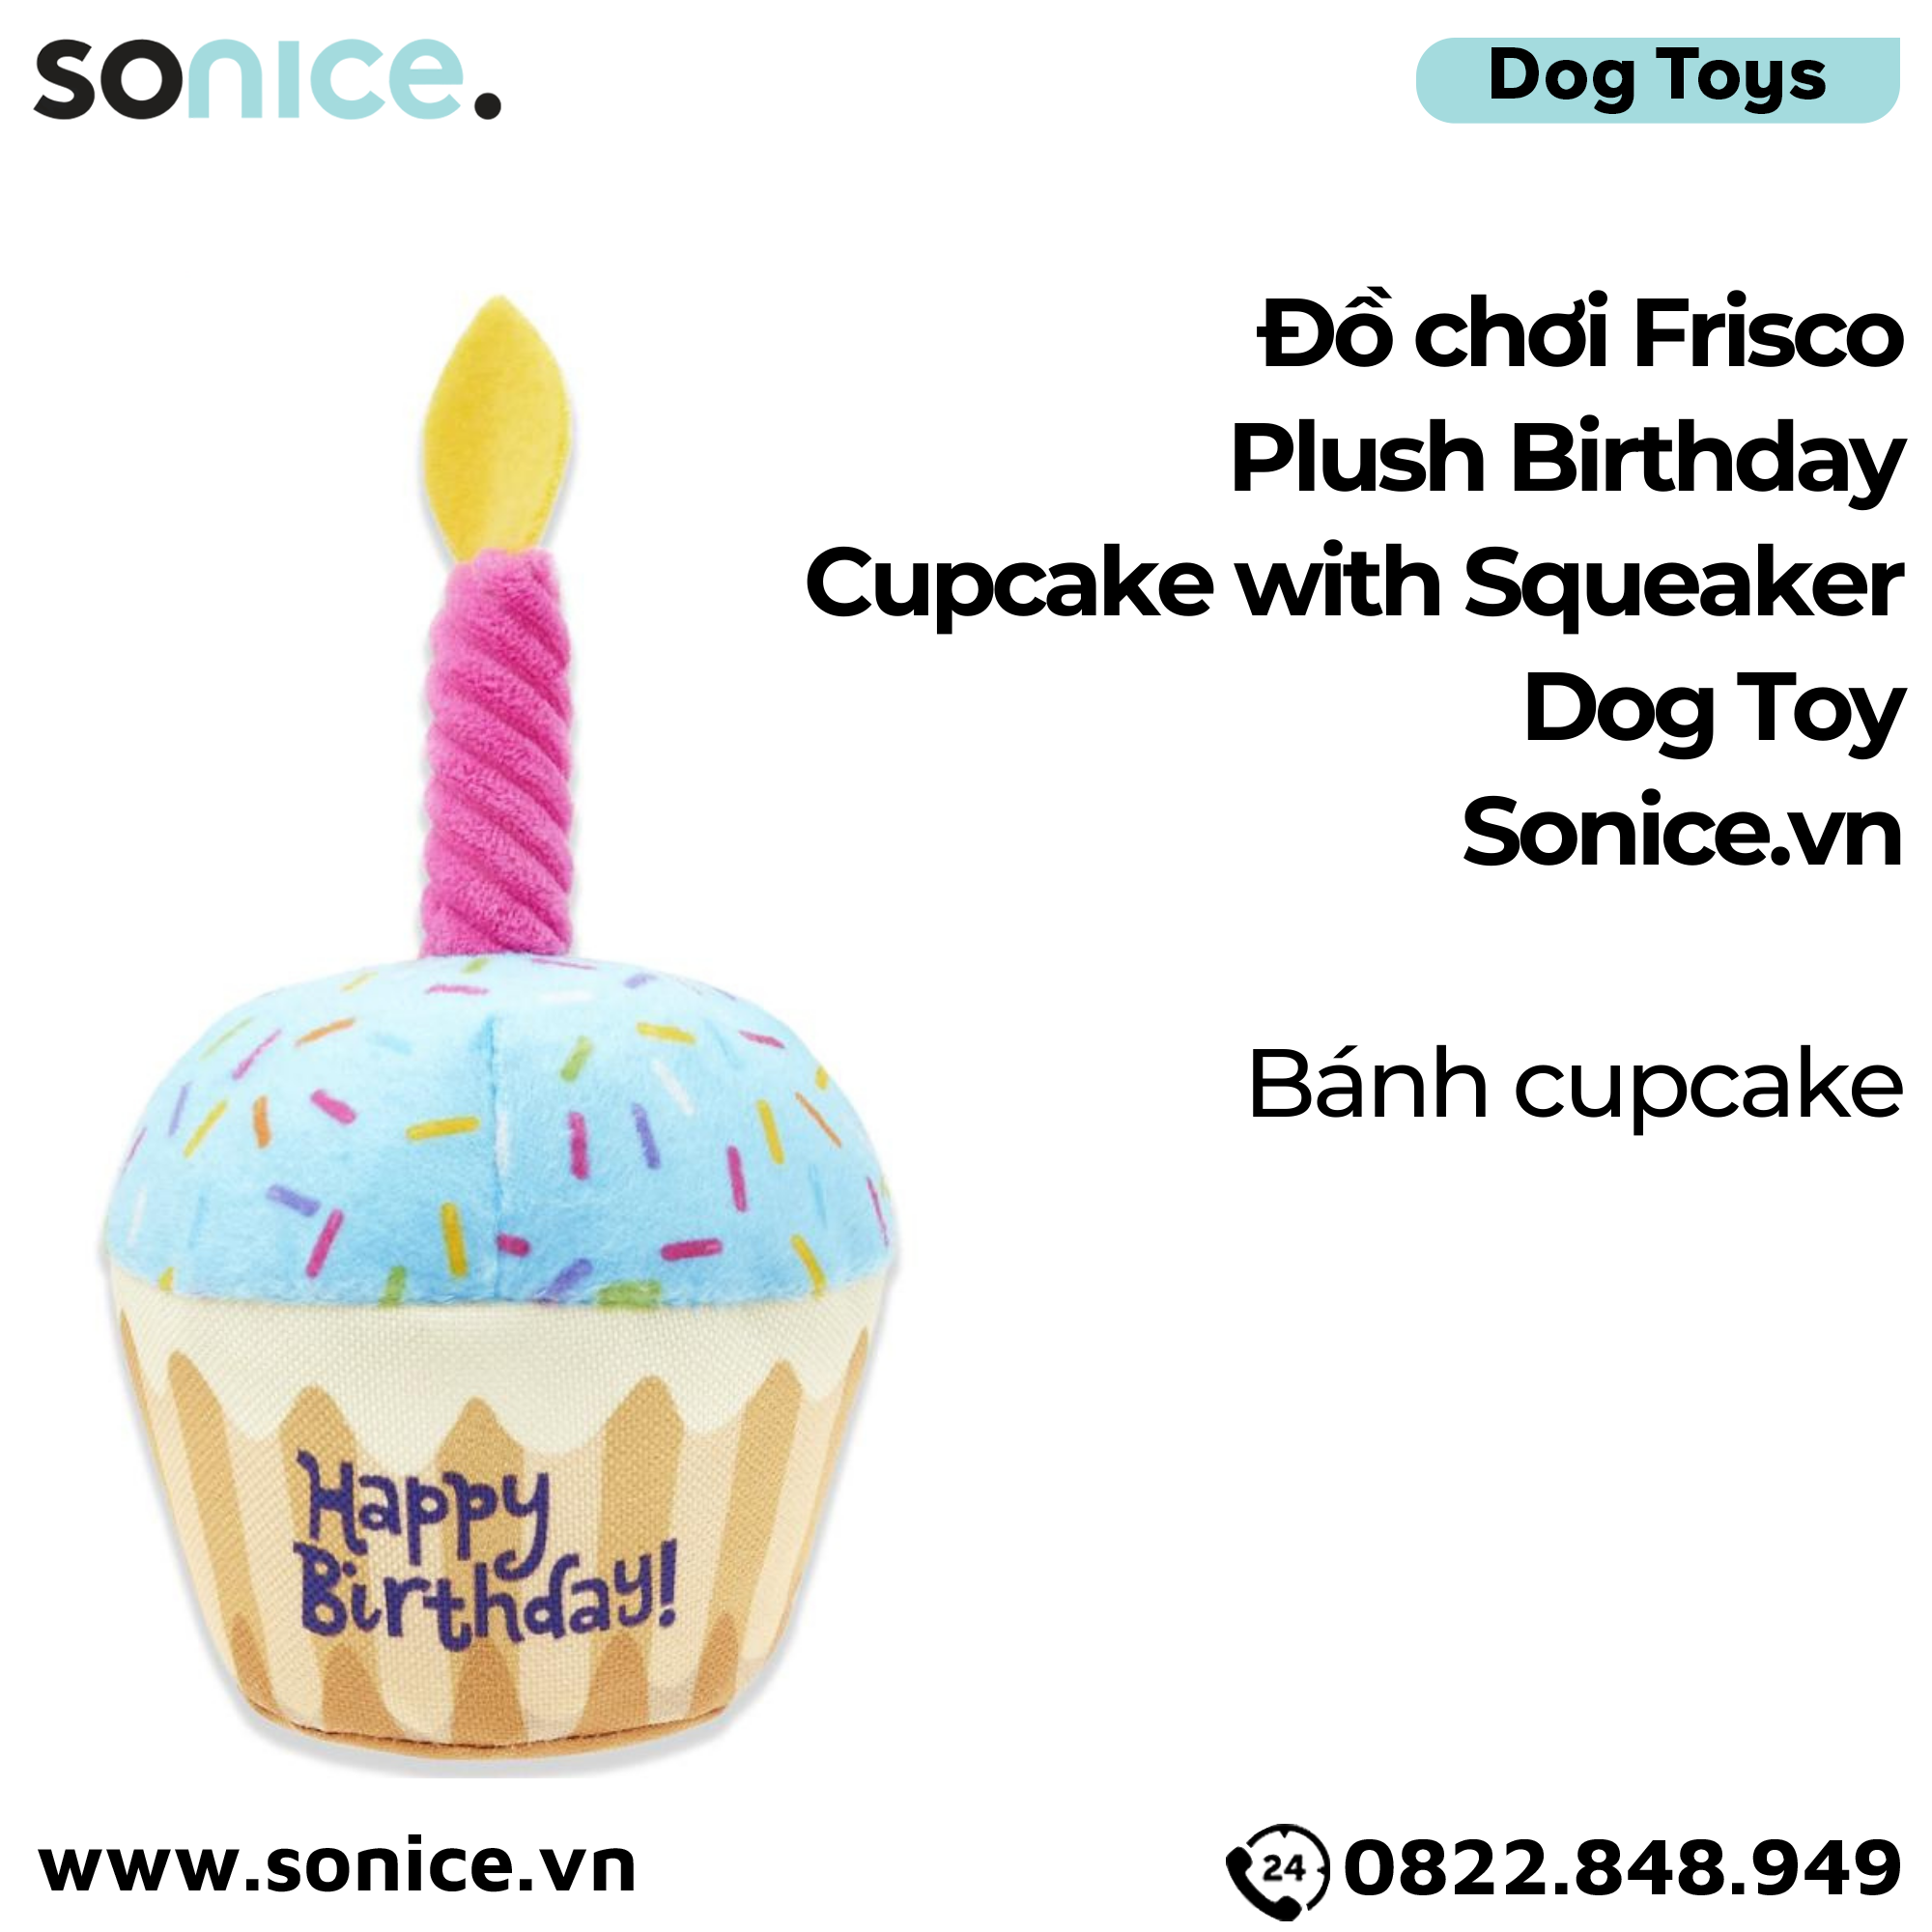  Đồ chơi Frisco Plush Birthday Cupcake with Squeaker Dog Toy - Bánh cupcake SONICE. 